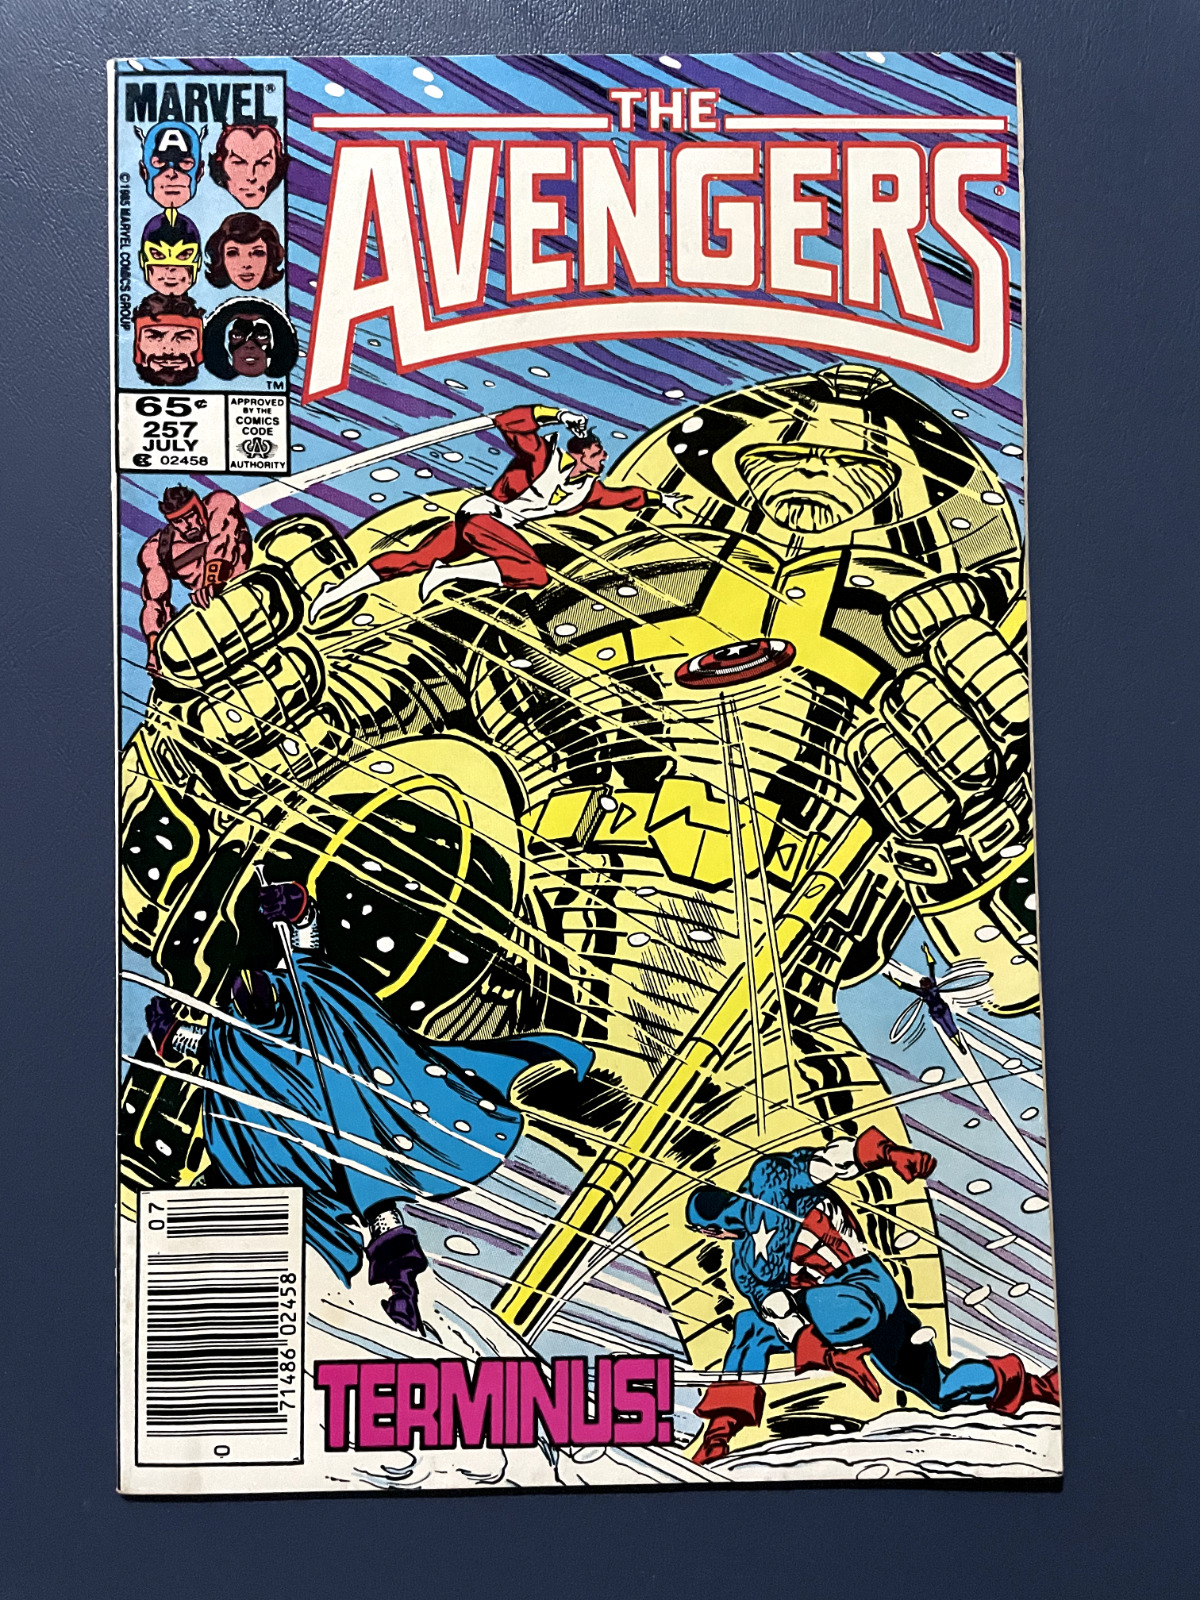 The Avengers #257 - 1st appearance of Nebula